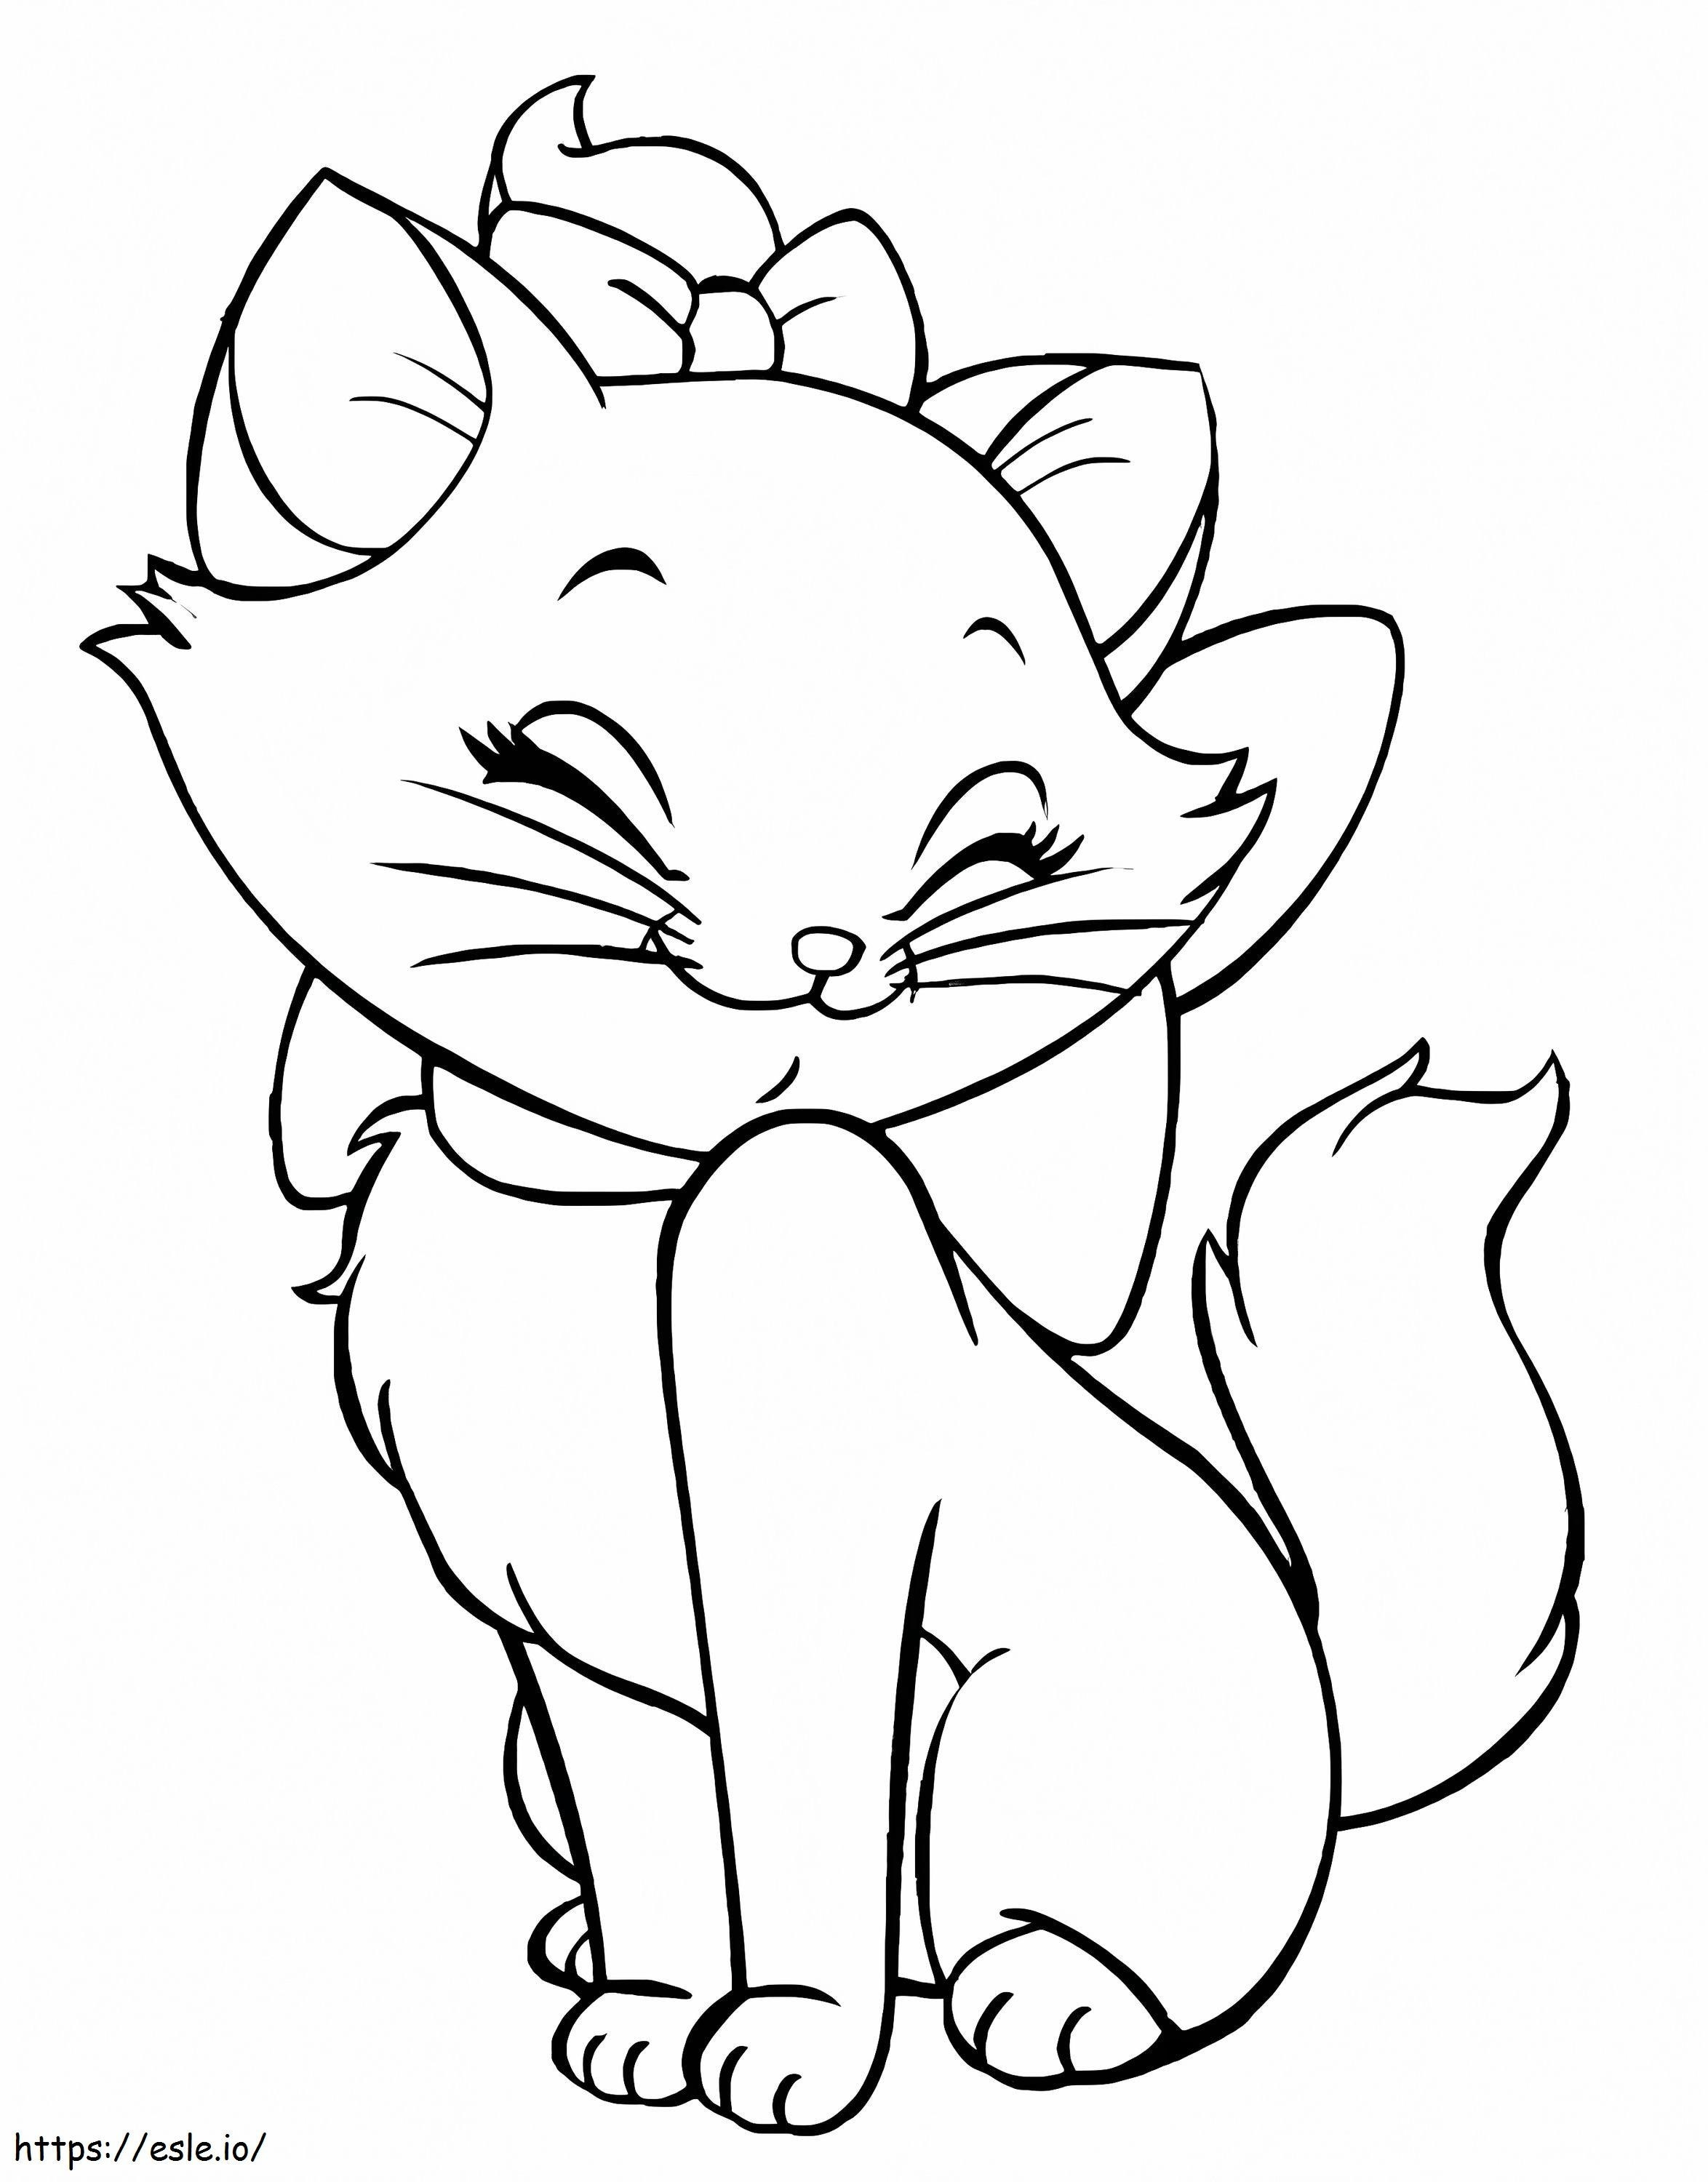 Marie Cat da Disney para colorir